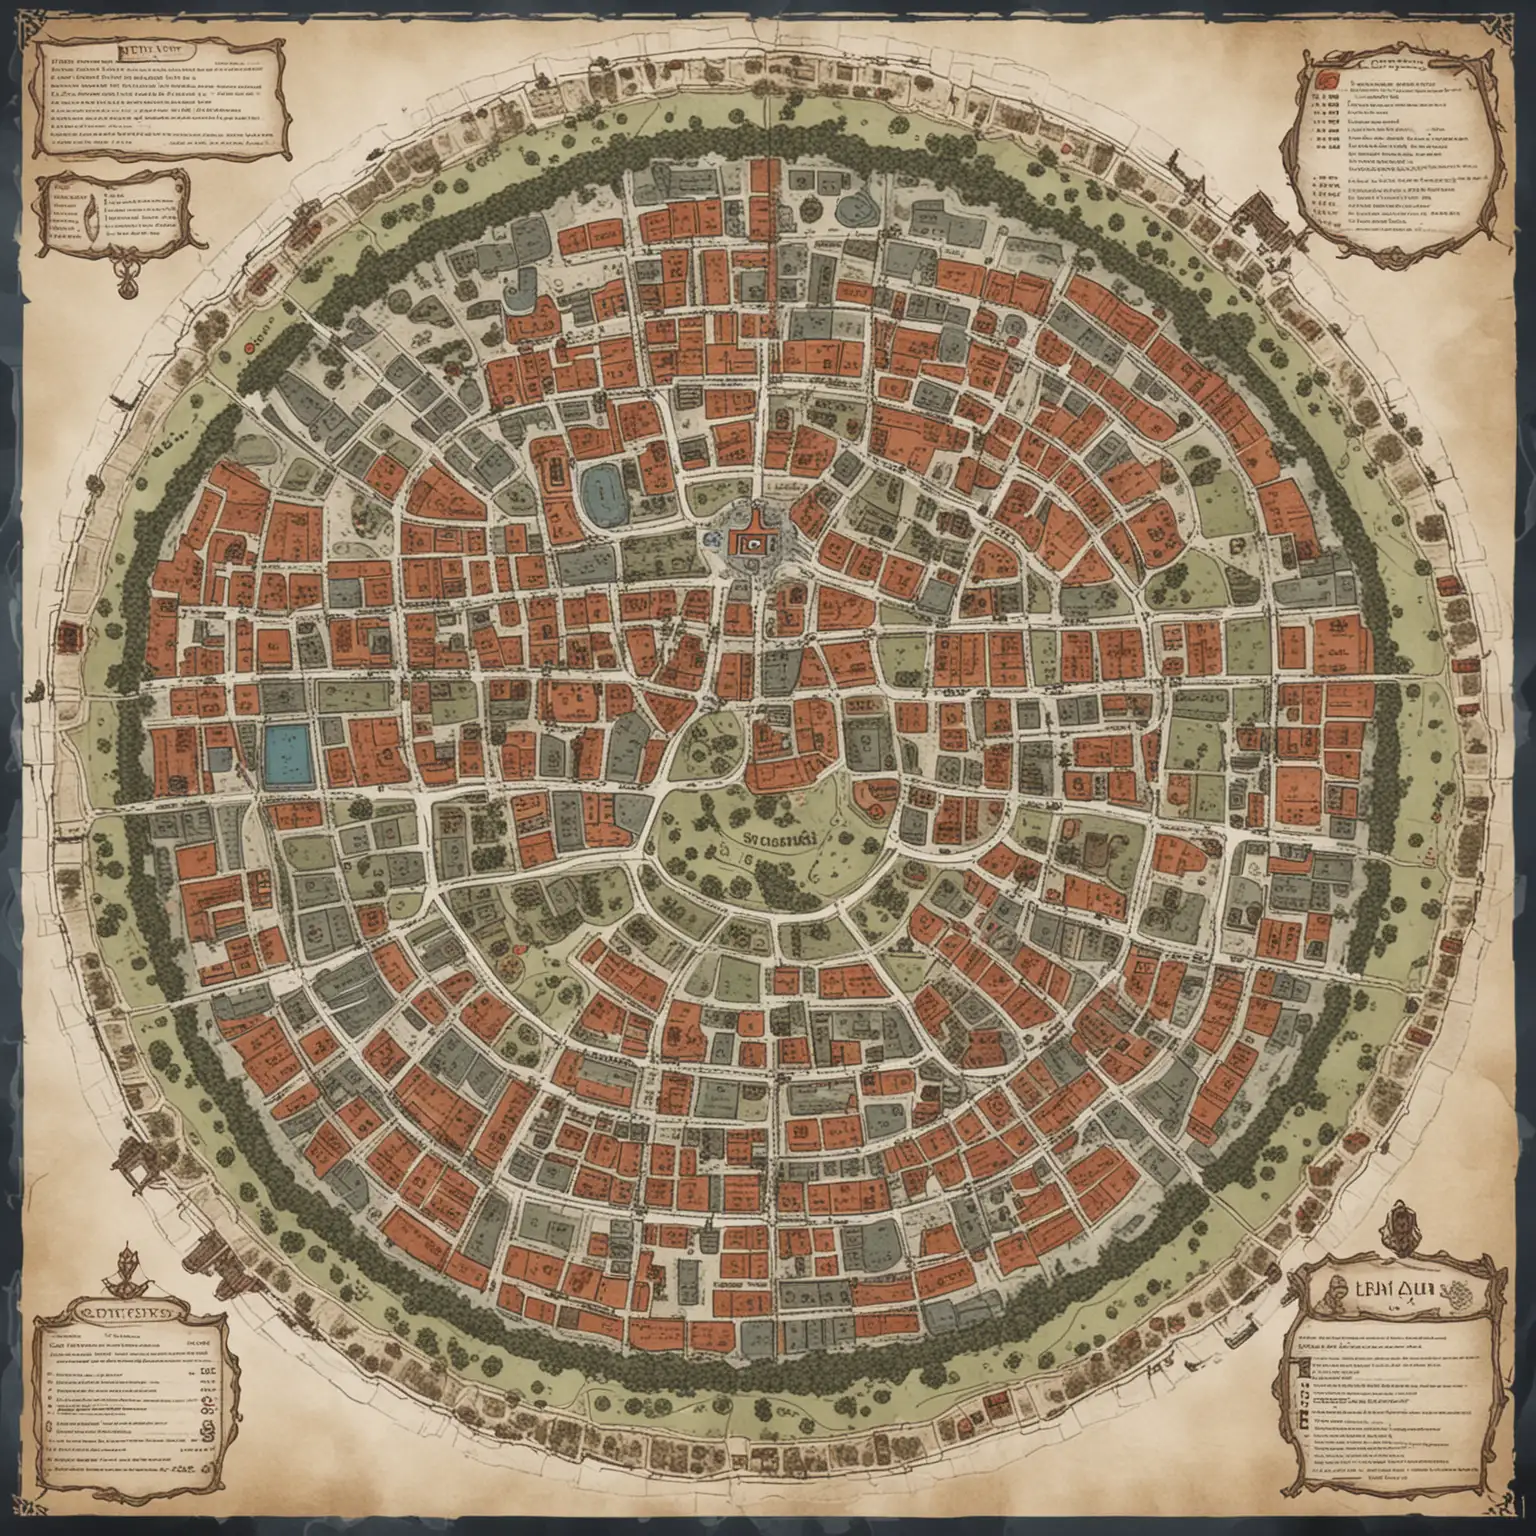 Fantasy City Battle Map ThreeTiered Round City with 25000 Inhabitants